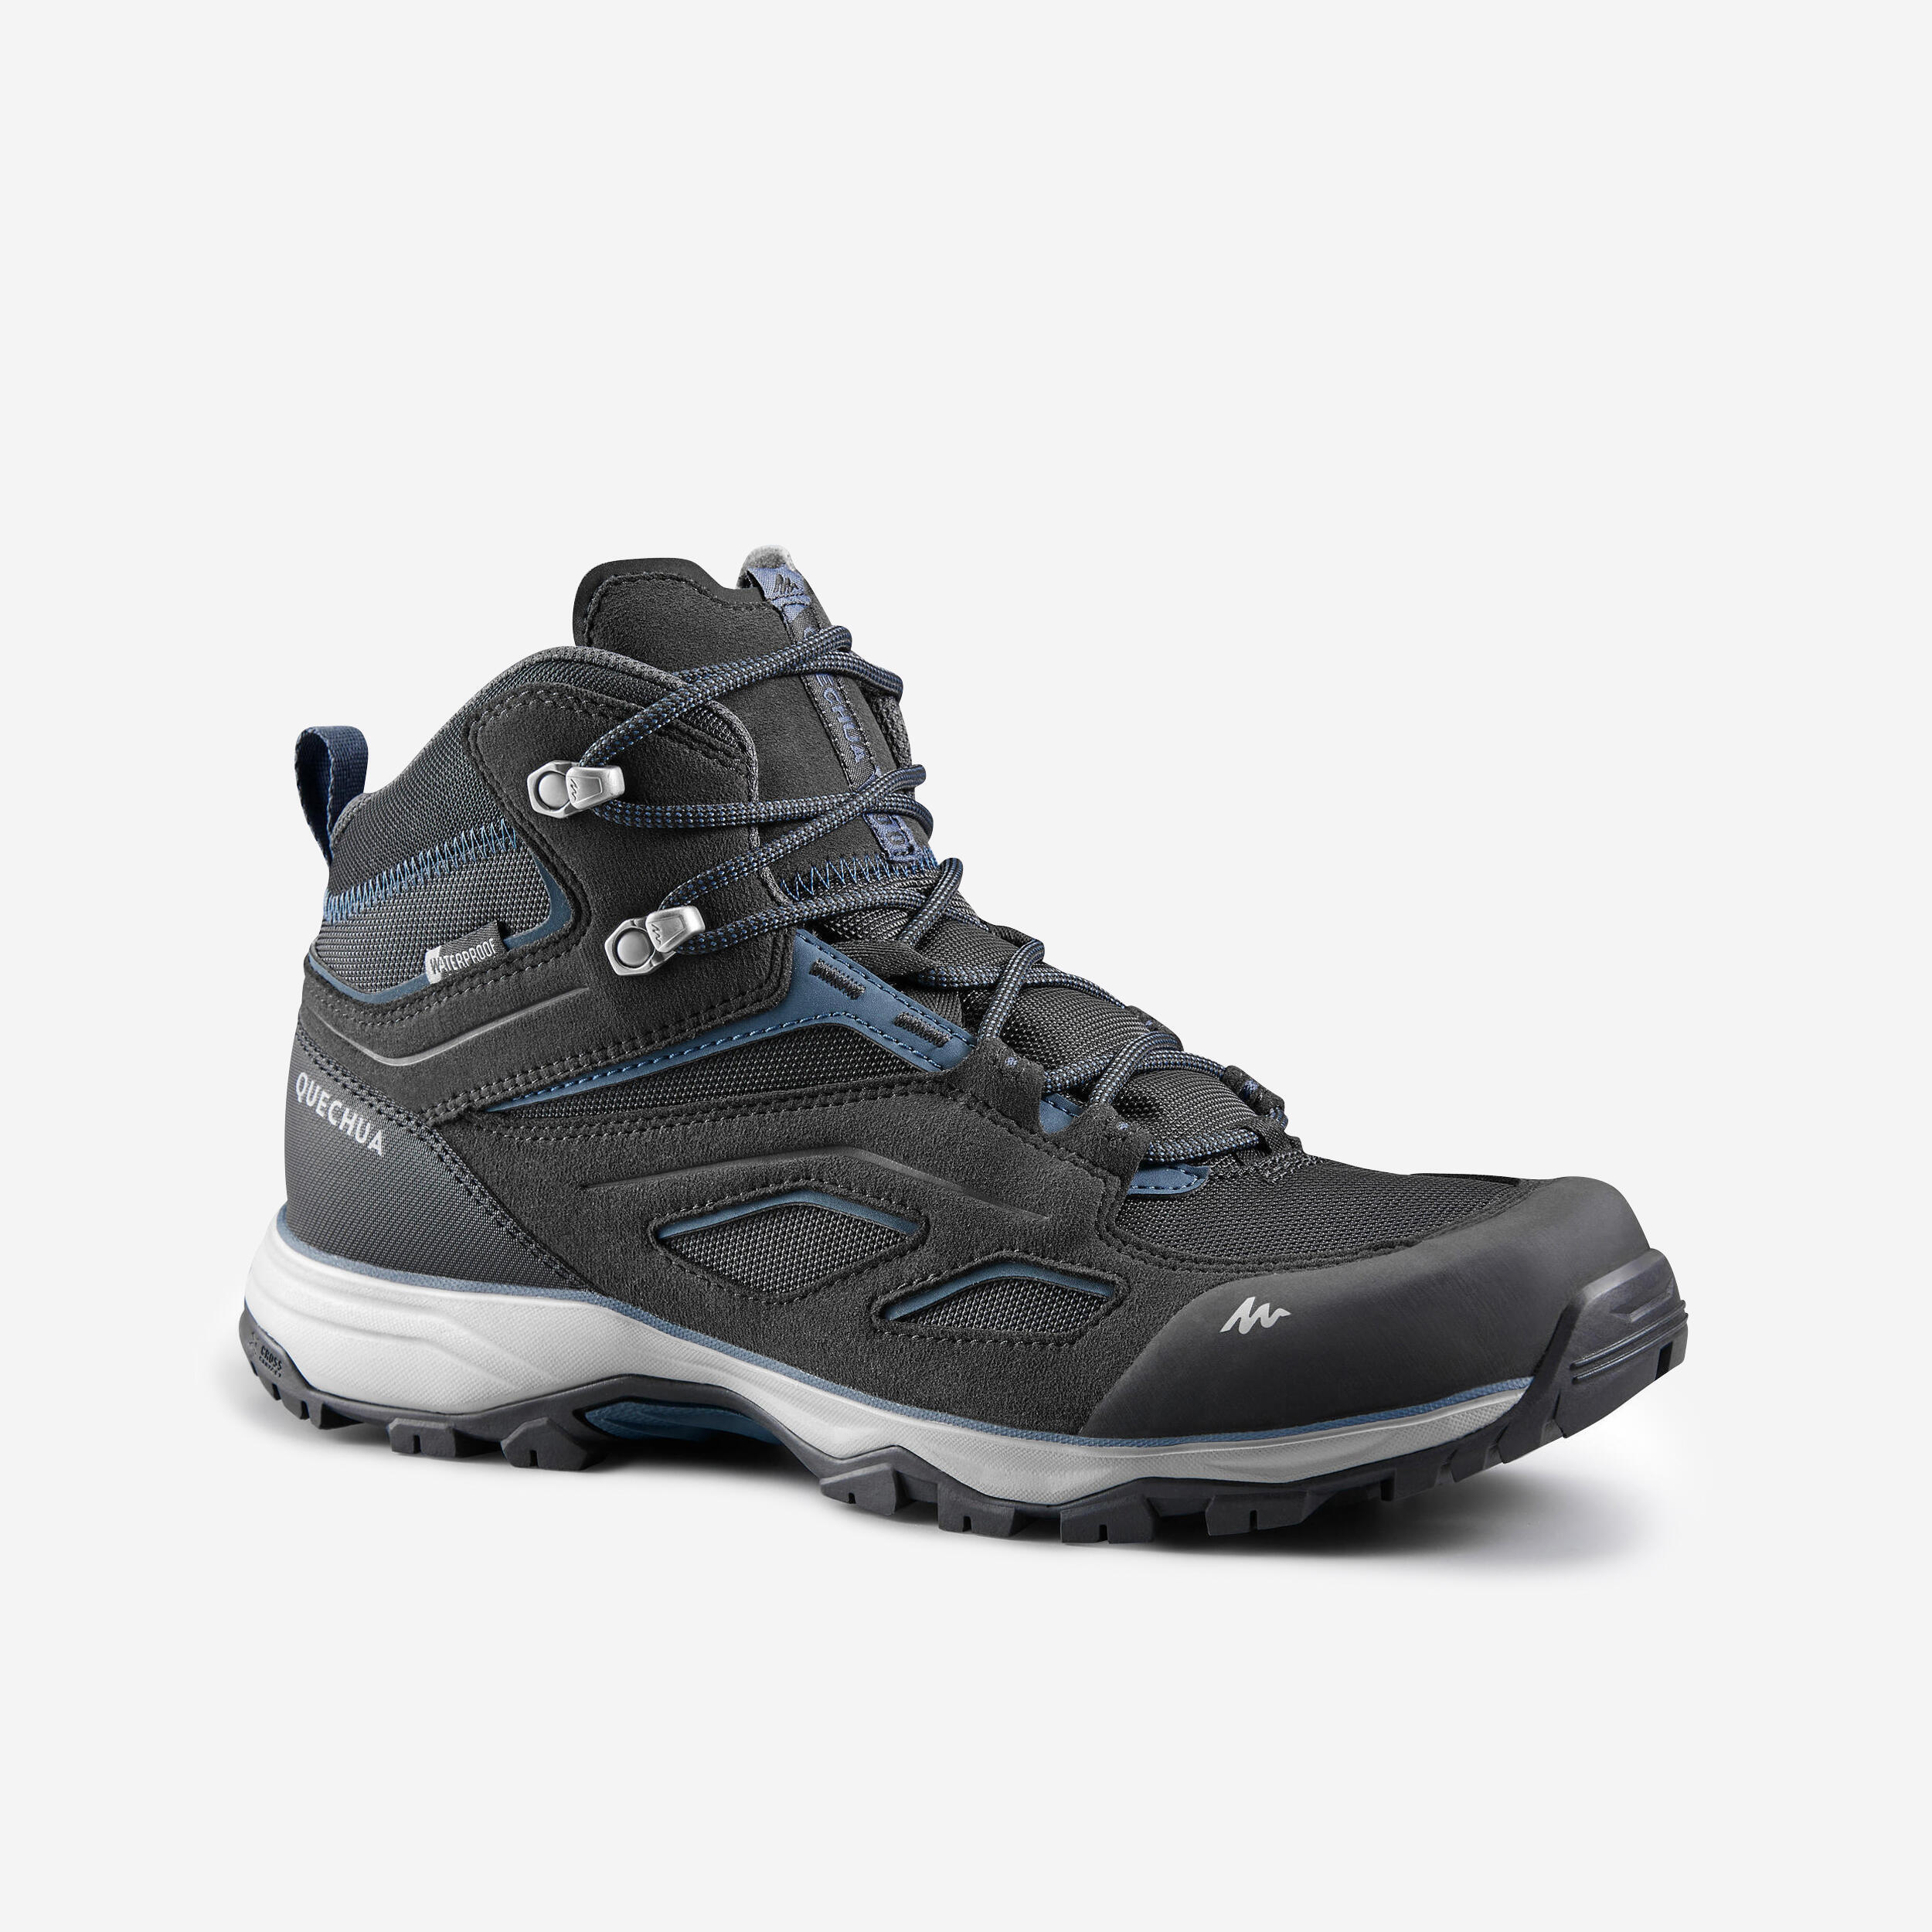 QUECHUA Men's Waterproof Mountain Walking Boot-Shoes - MH100 Mid - Black